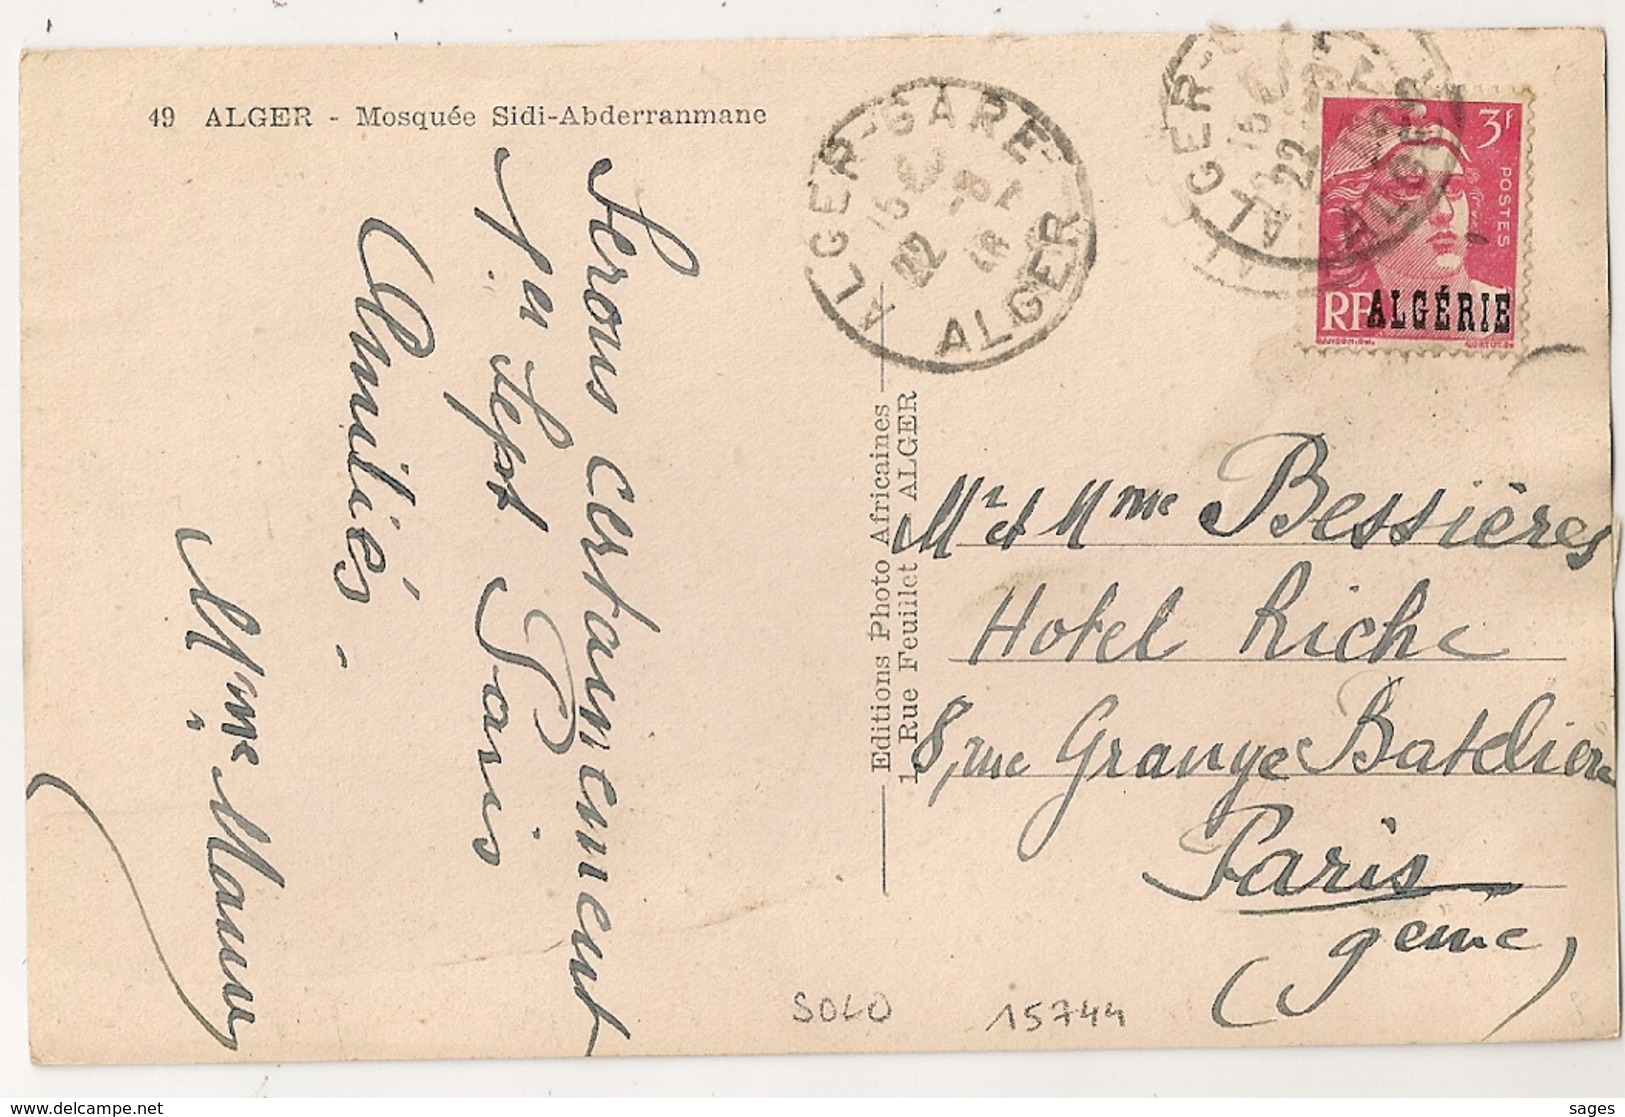 DAGUIN SOLO ALGER GARE (Foulage) Sur 3F GANDON Algérie. 1946. - Briefe U. Dokumente